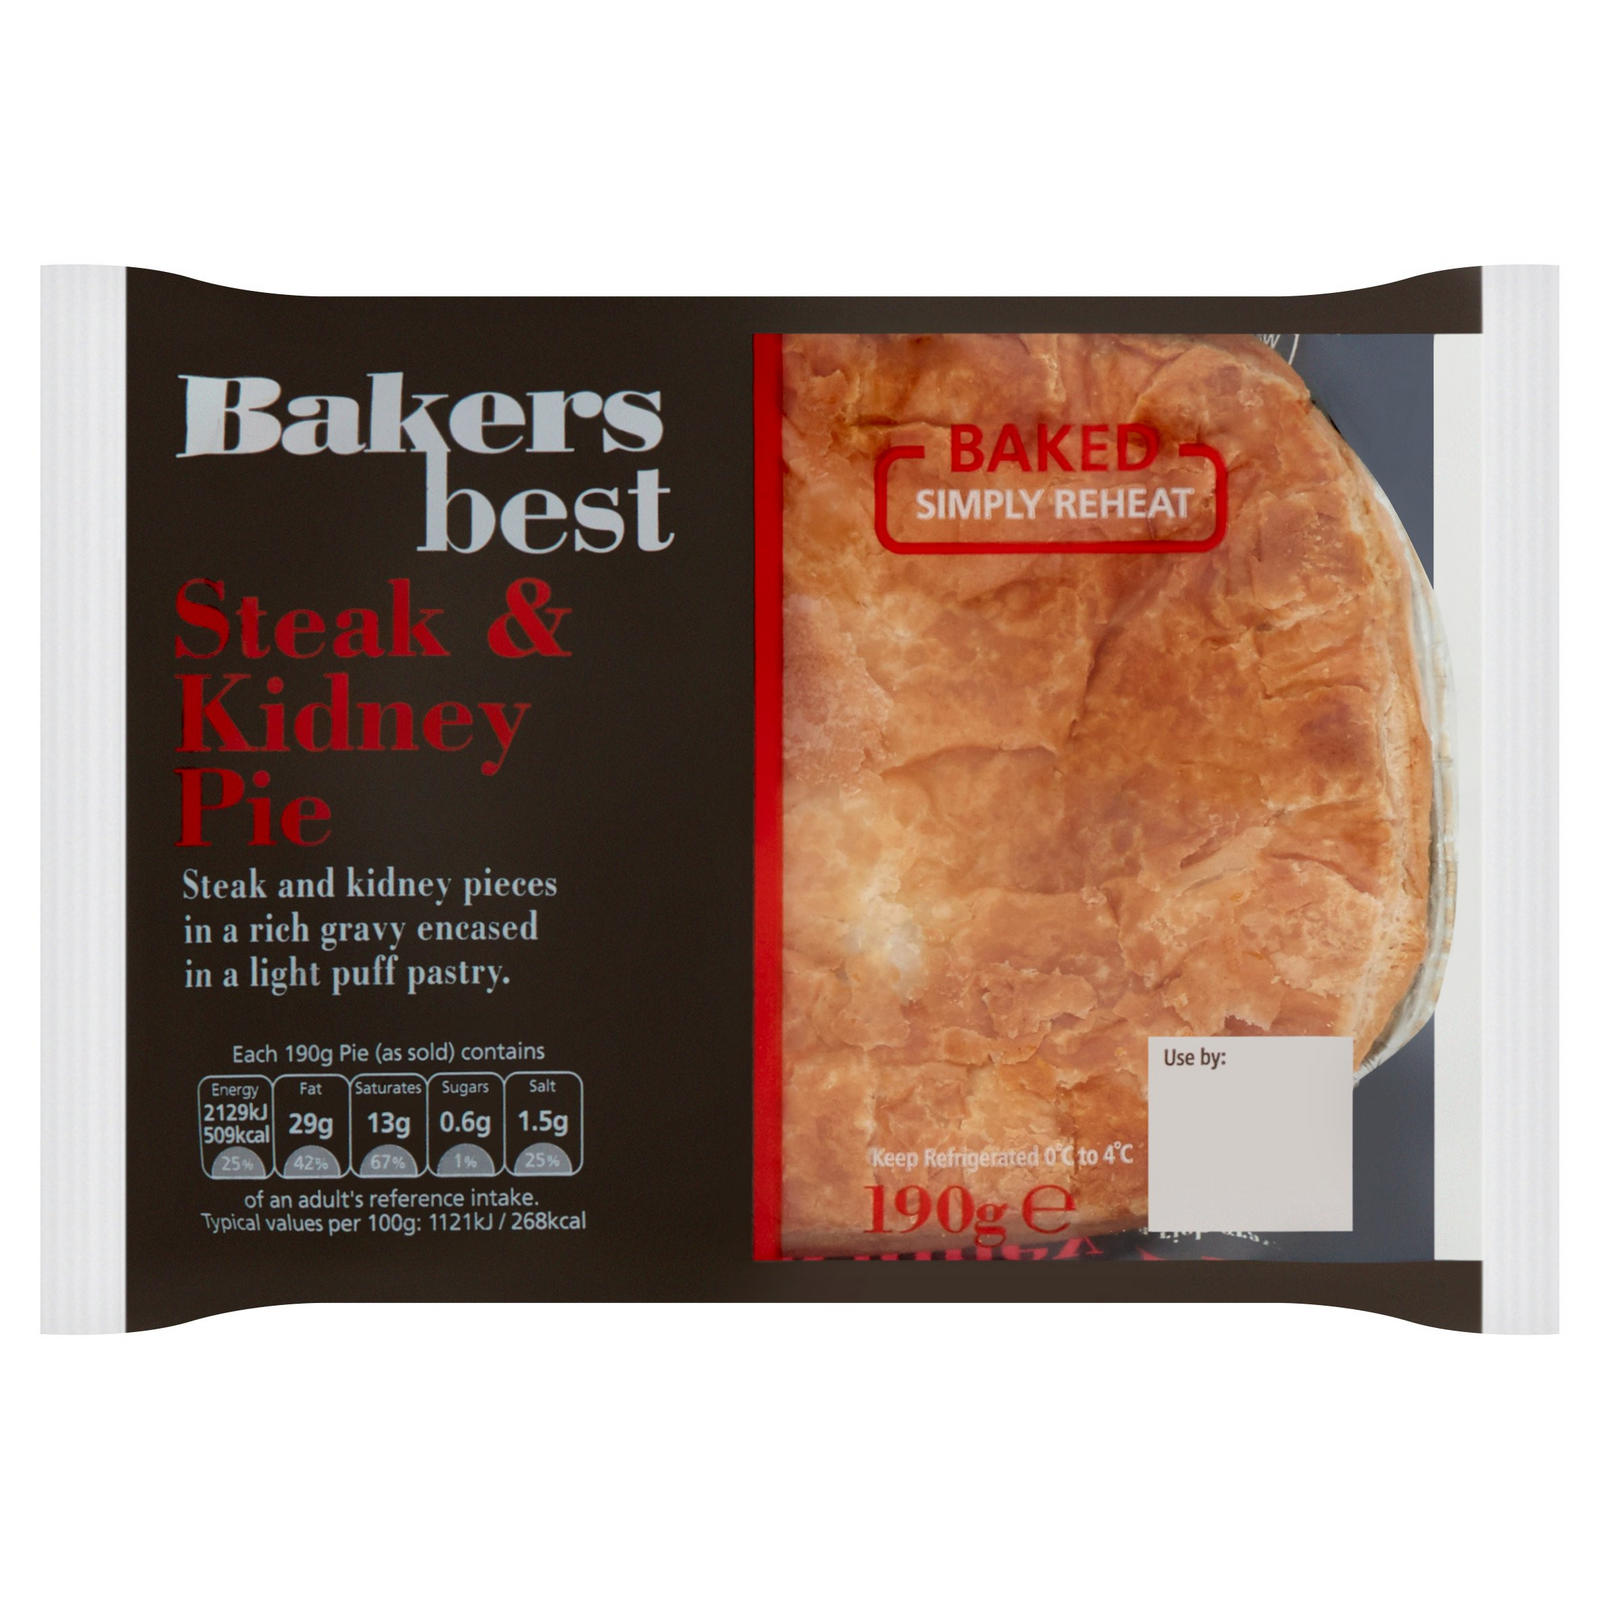 Bakers Best Steak & Kidney Pie 190g | Chilled Ready Meals & Snacks